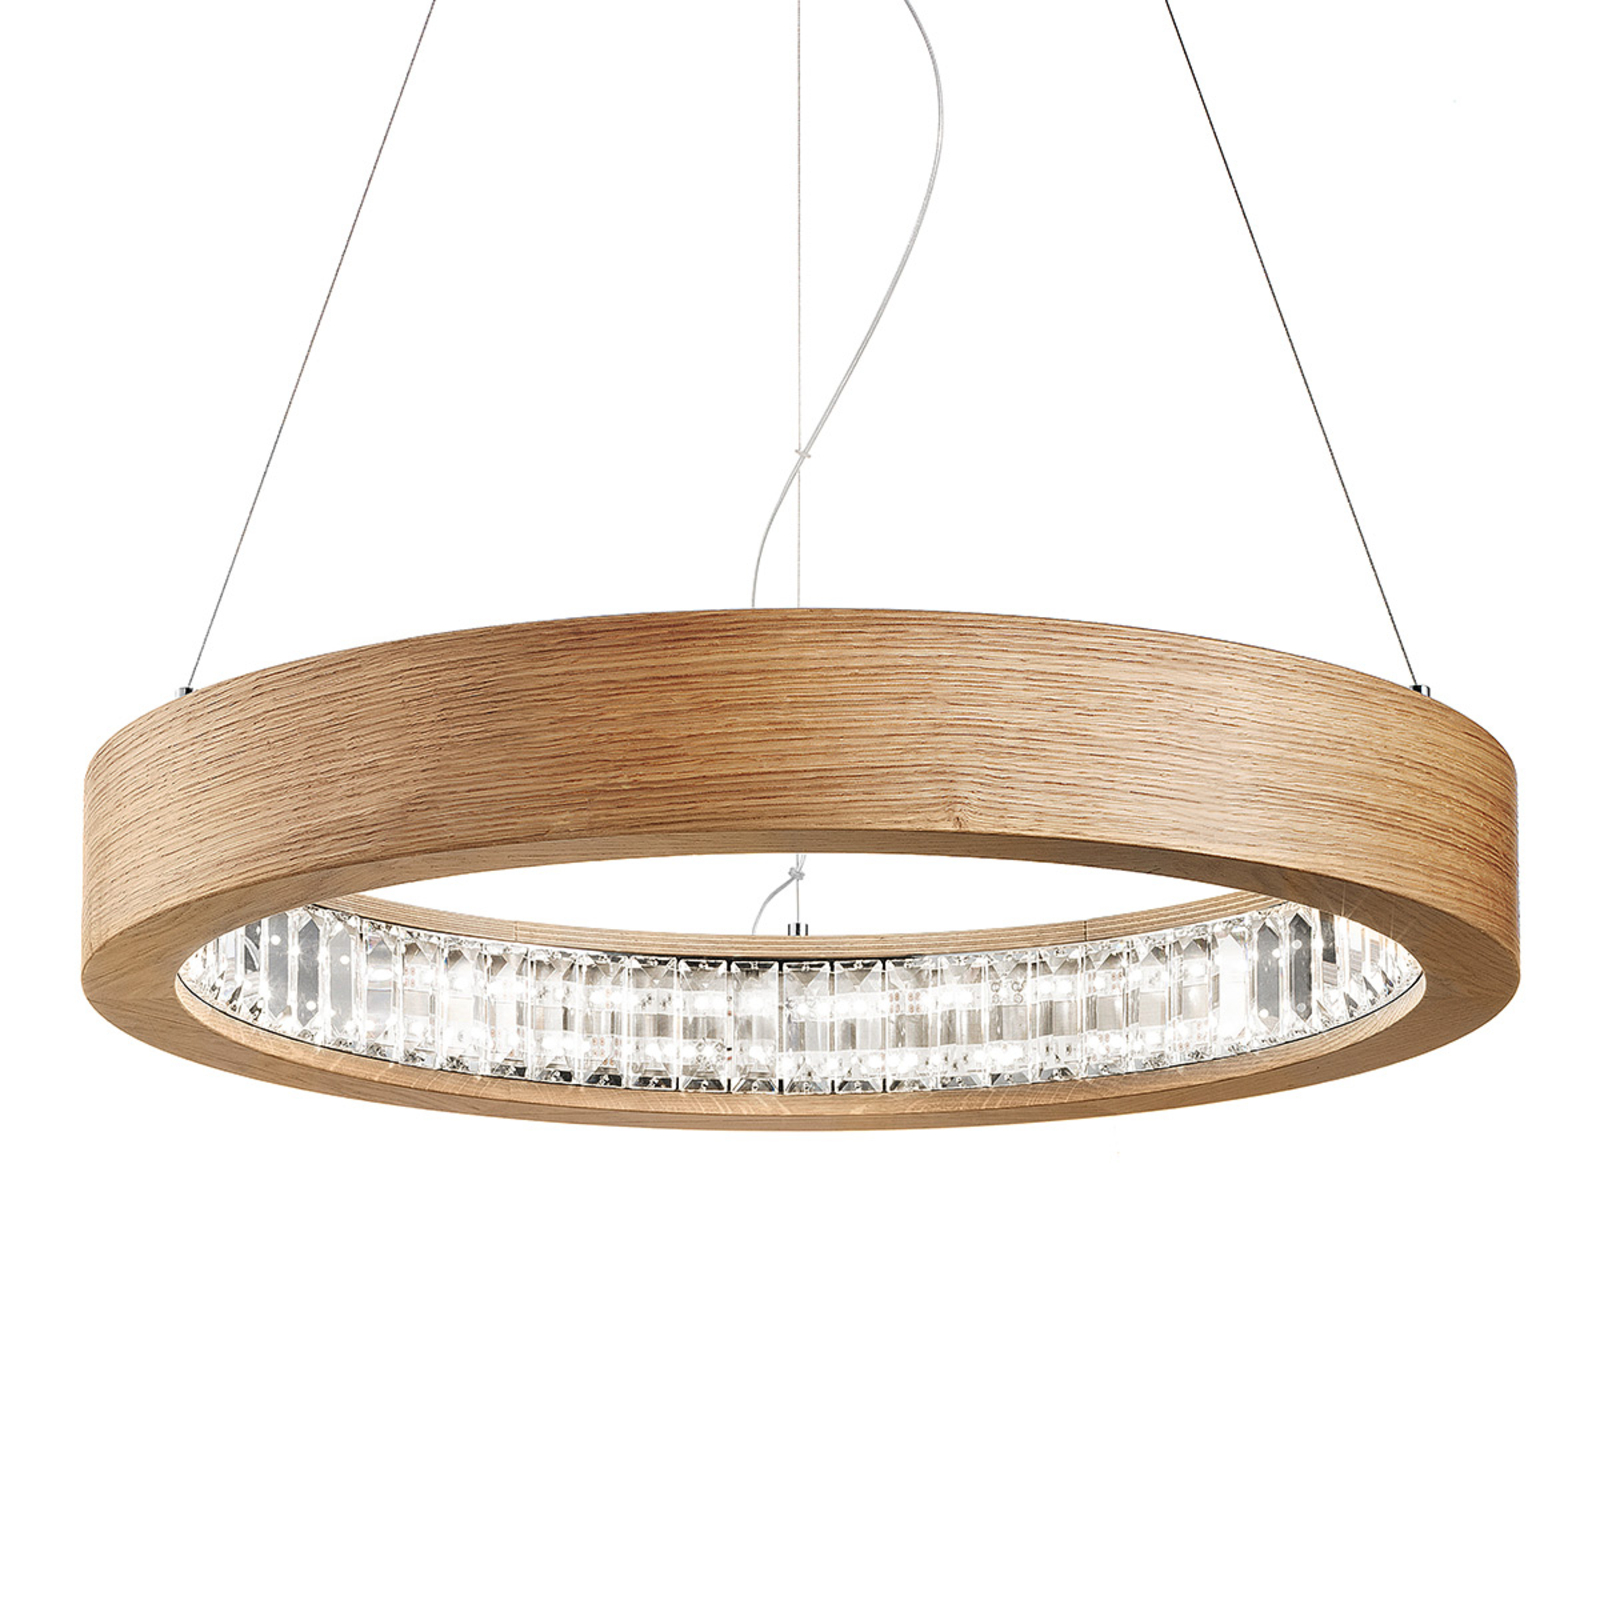 verwerken Kneden Nauwkeurigheid Ronde LED hanglamp Libe Round, 60 cm | Lampen24.be